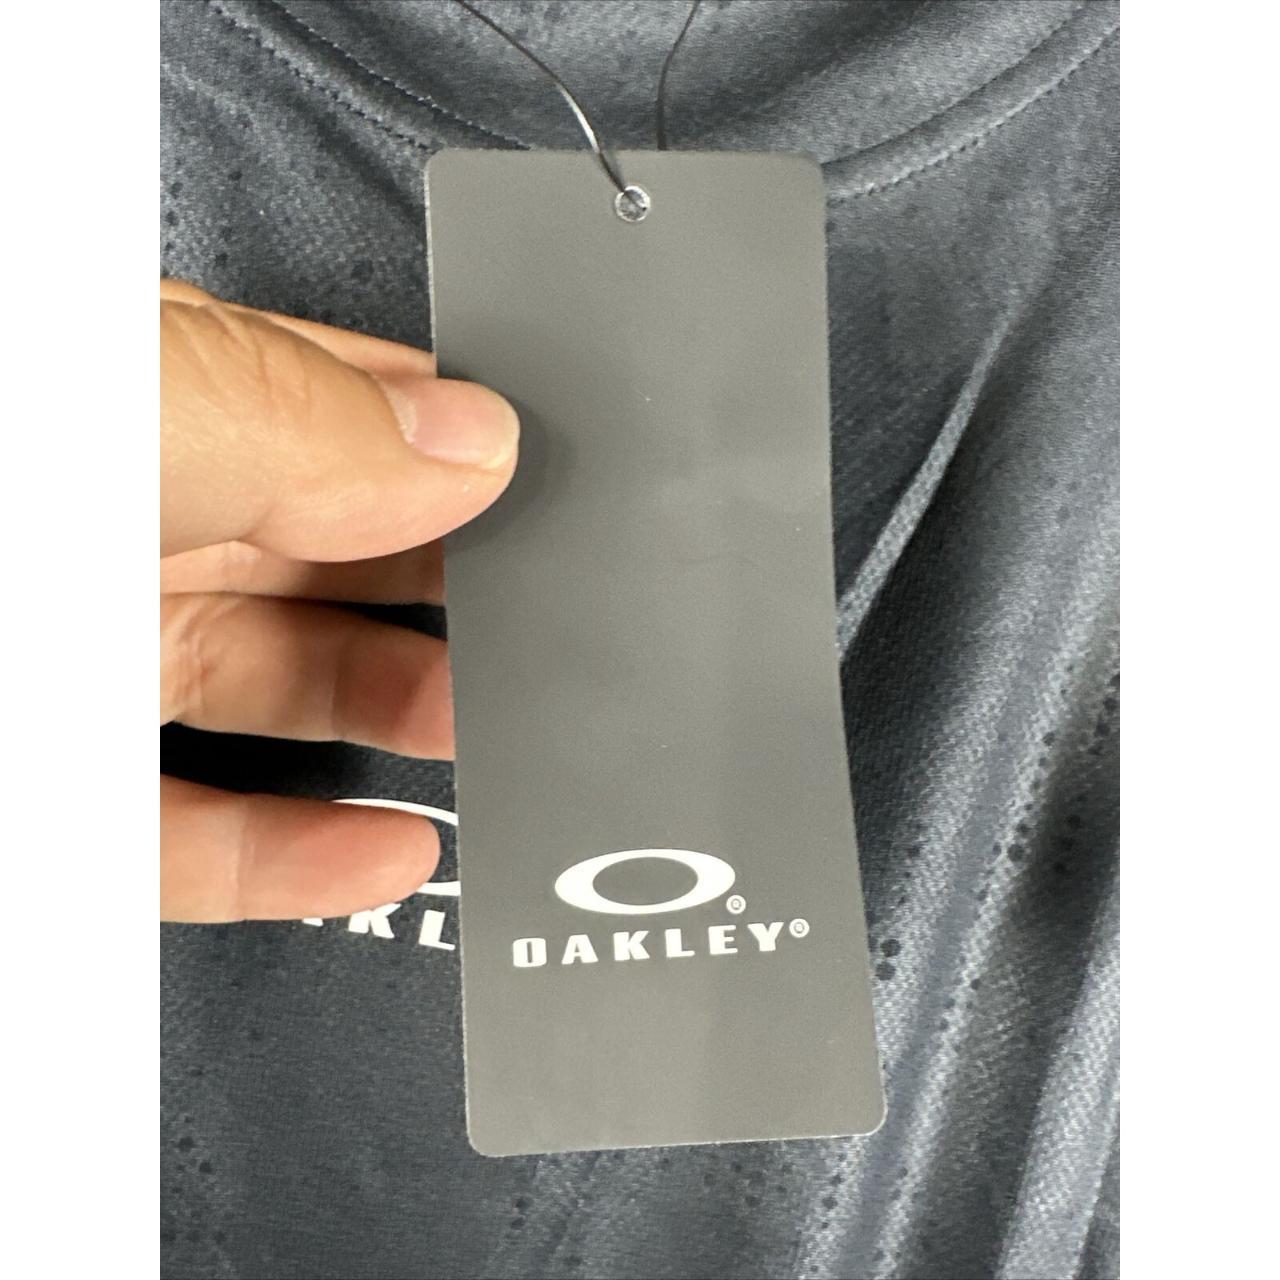 Oakley Matrix Print Rc Tee Promoção - Camiseta Branco